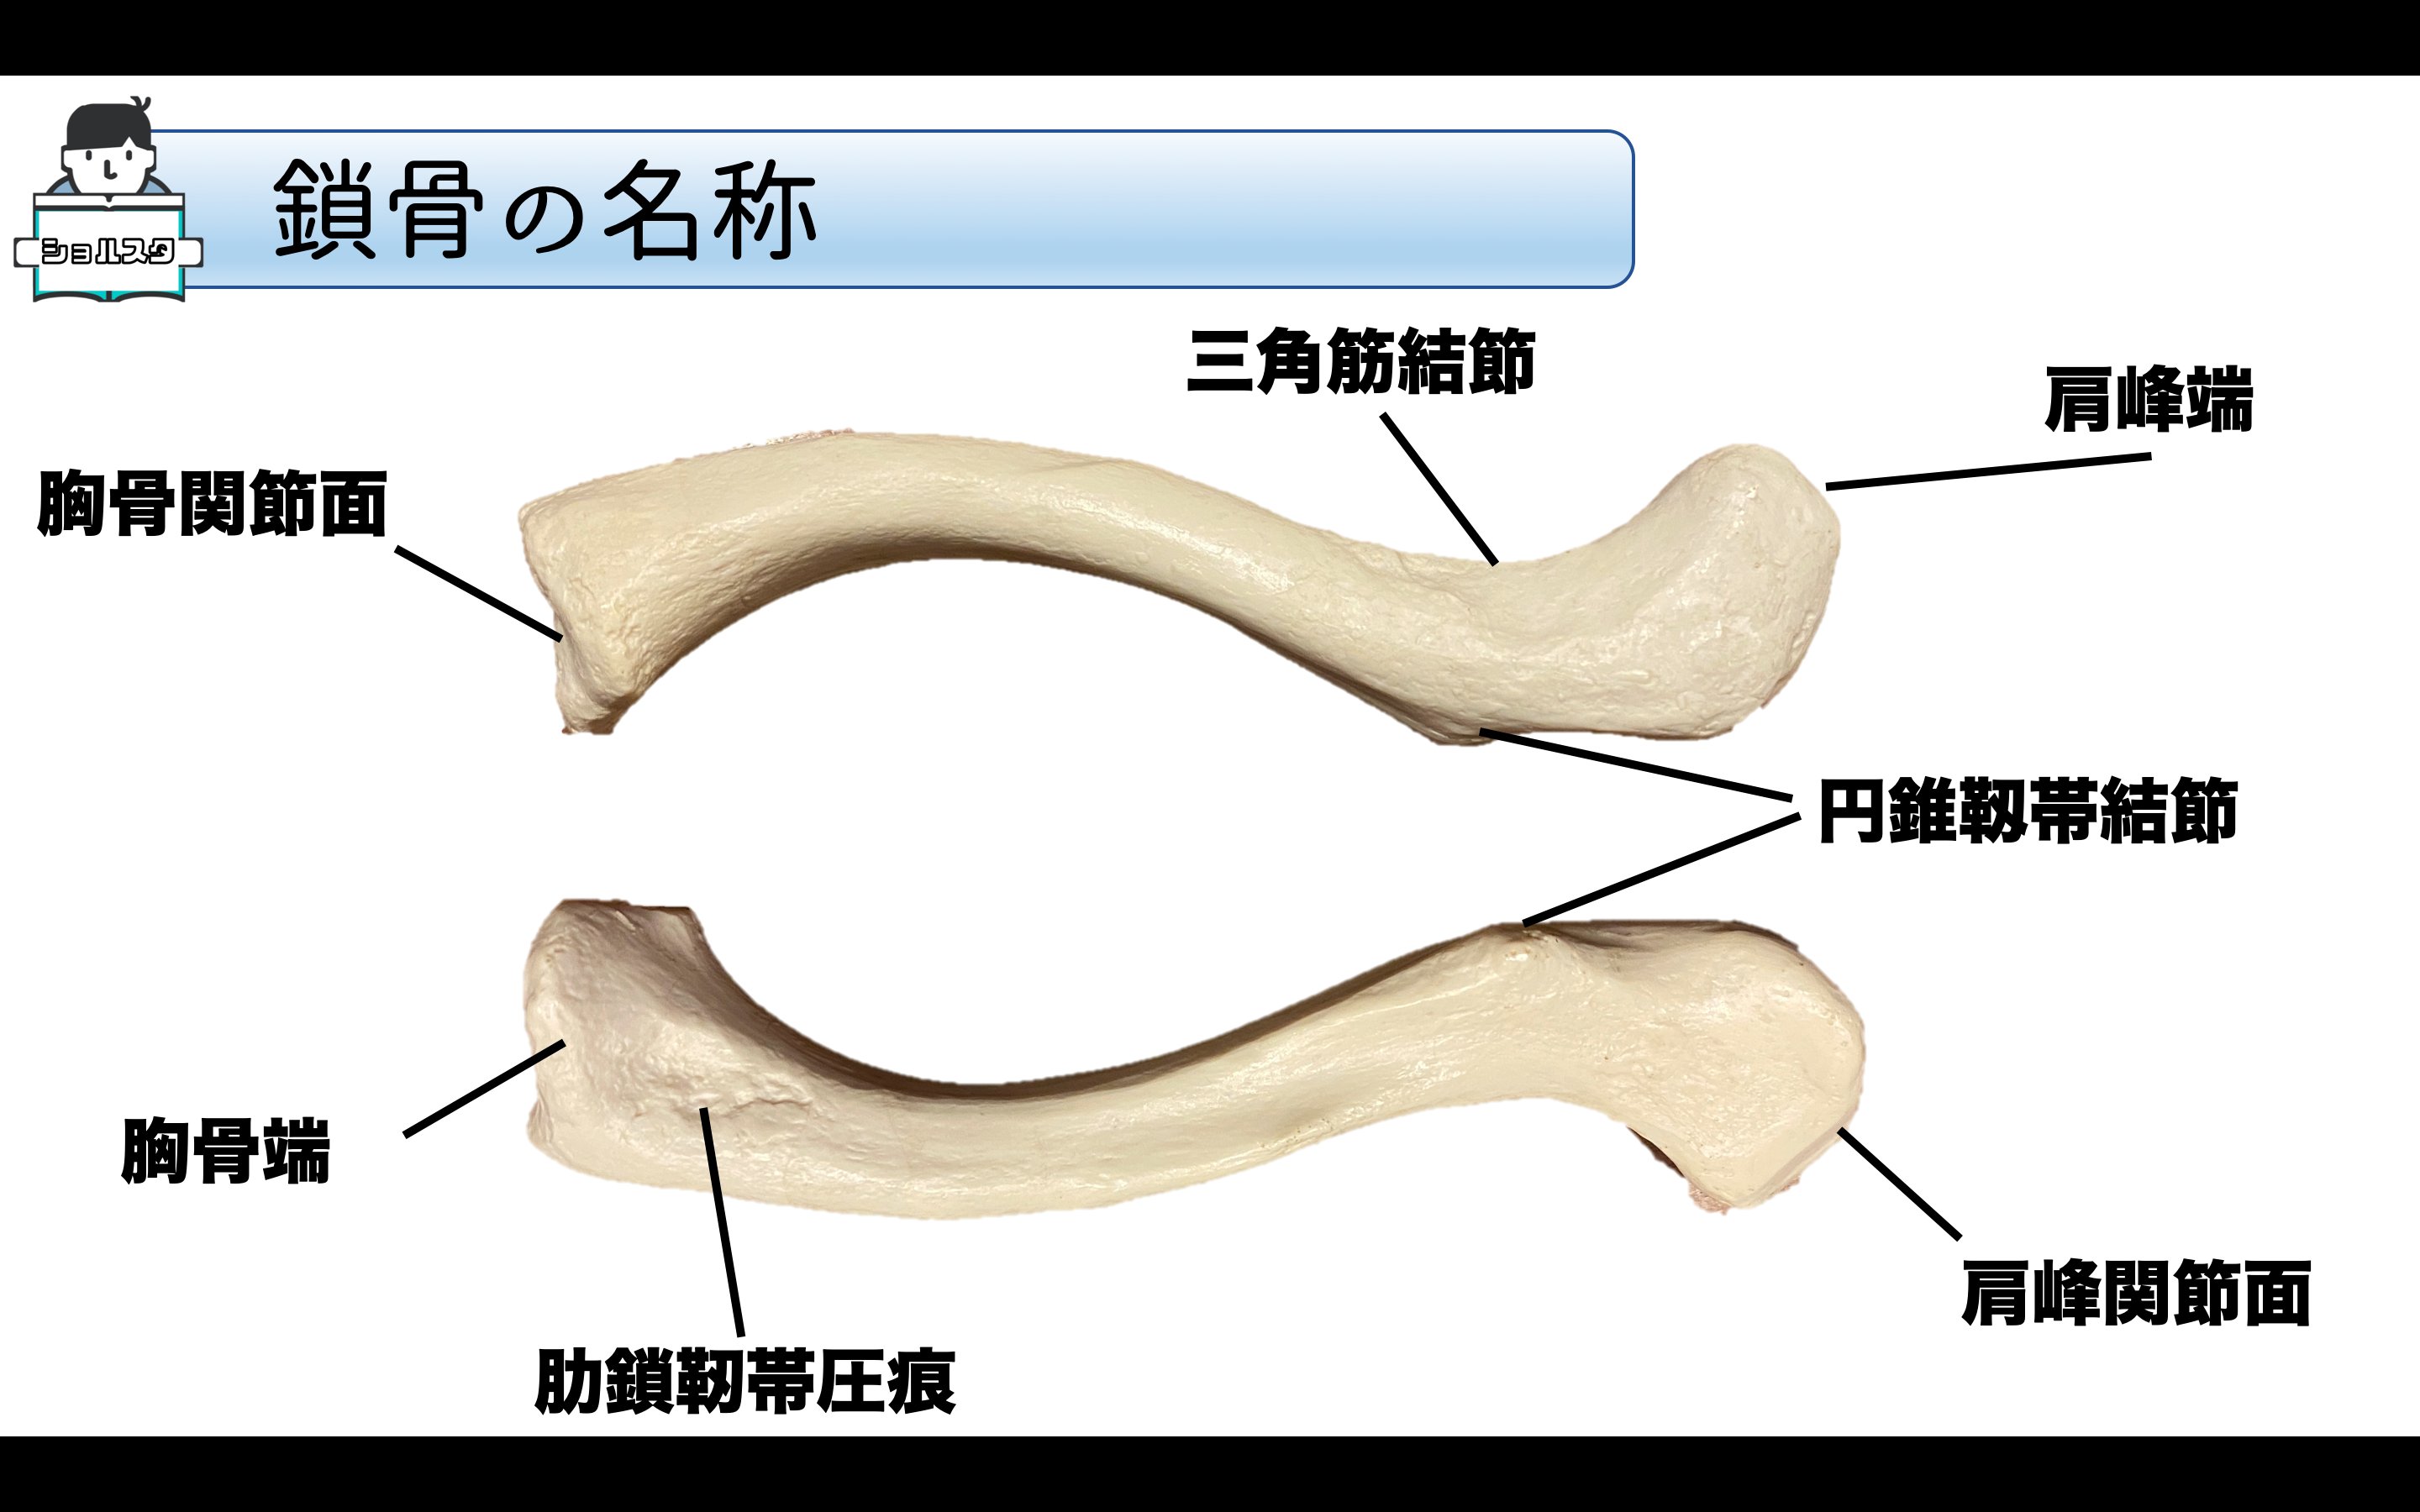 Shimizu Kota 肩関節機能研究会代表 鎖骨は骨の名称が意外と多いことを知っていますか そして筋や靭帯が豊富に付着する骨でもあります 今回はまず骨の名称からしっかりと覚えていきましょう 鎖骨骨折の際に骨の名称や部位を知っていると 骨折部位から